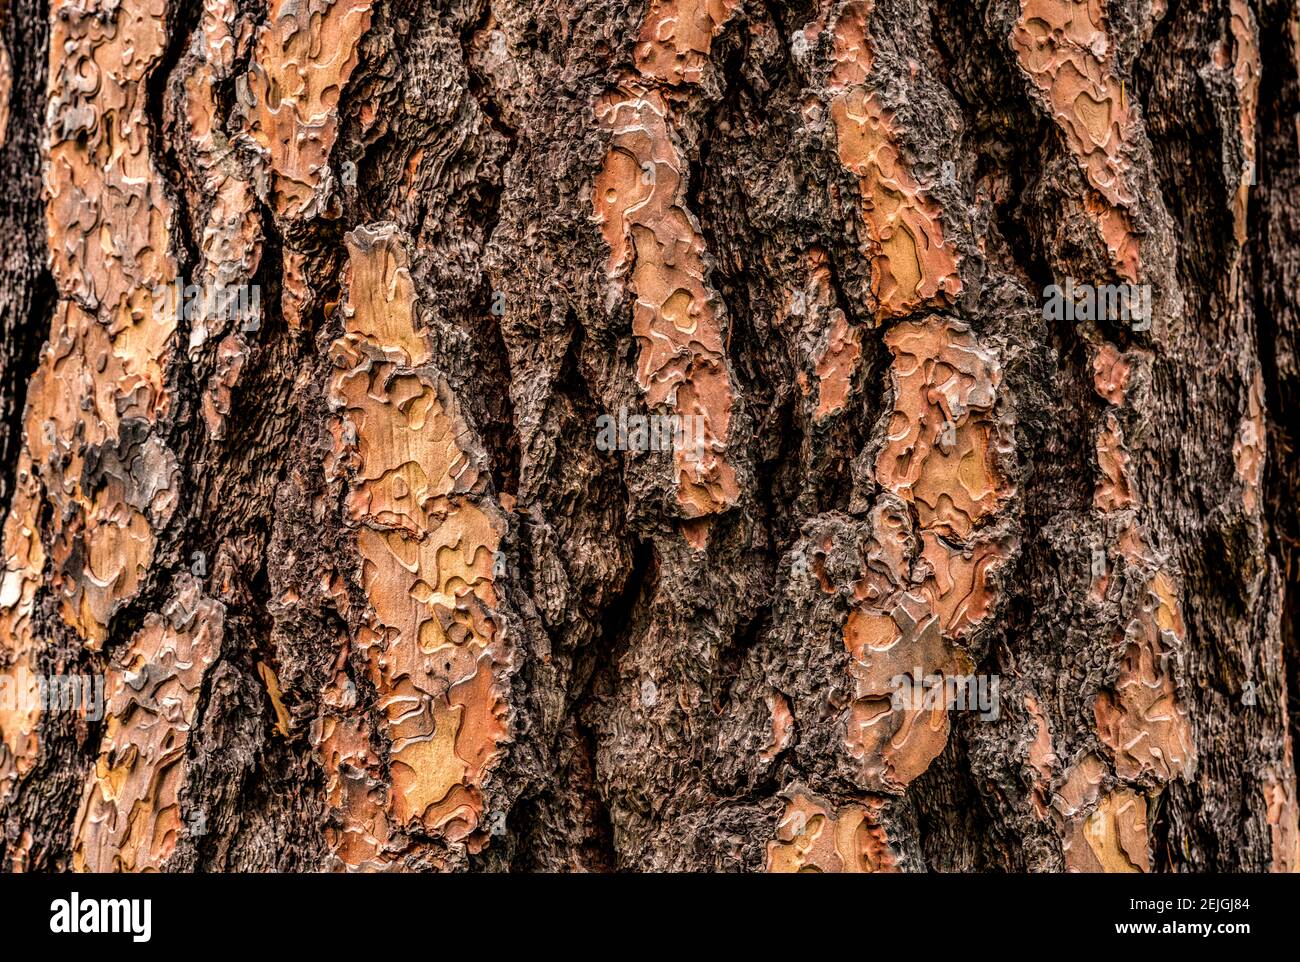 Ponderosa pine (Pinus ponderosa) tree bark, Wasa, British Columbia, Canada Stock Photo